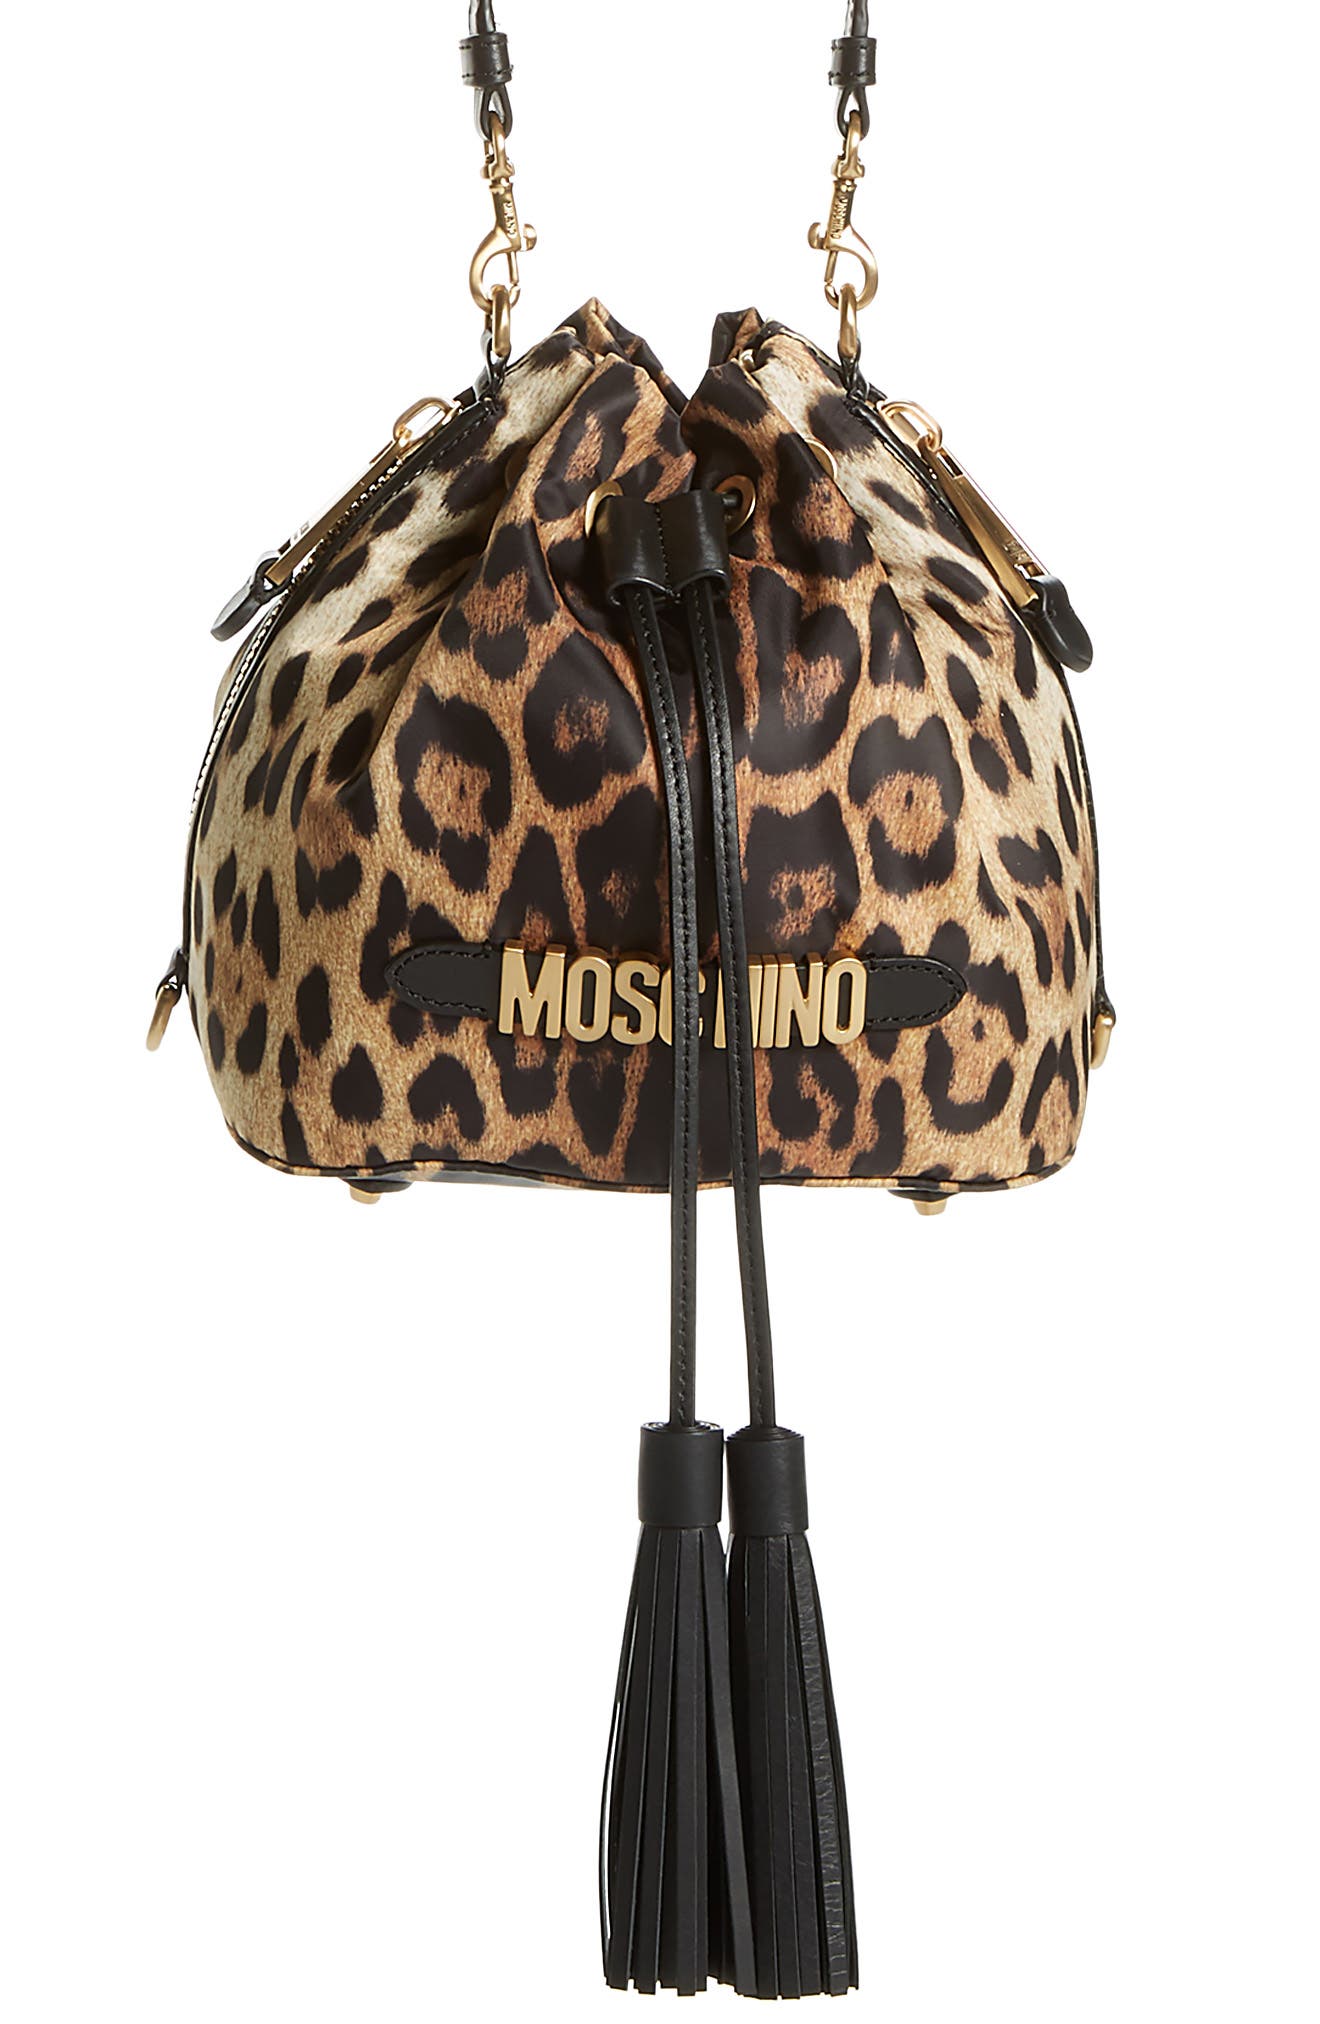 moschino leopard bag